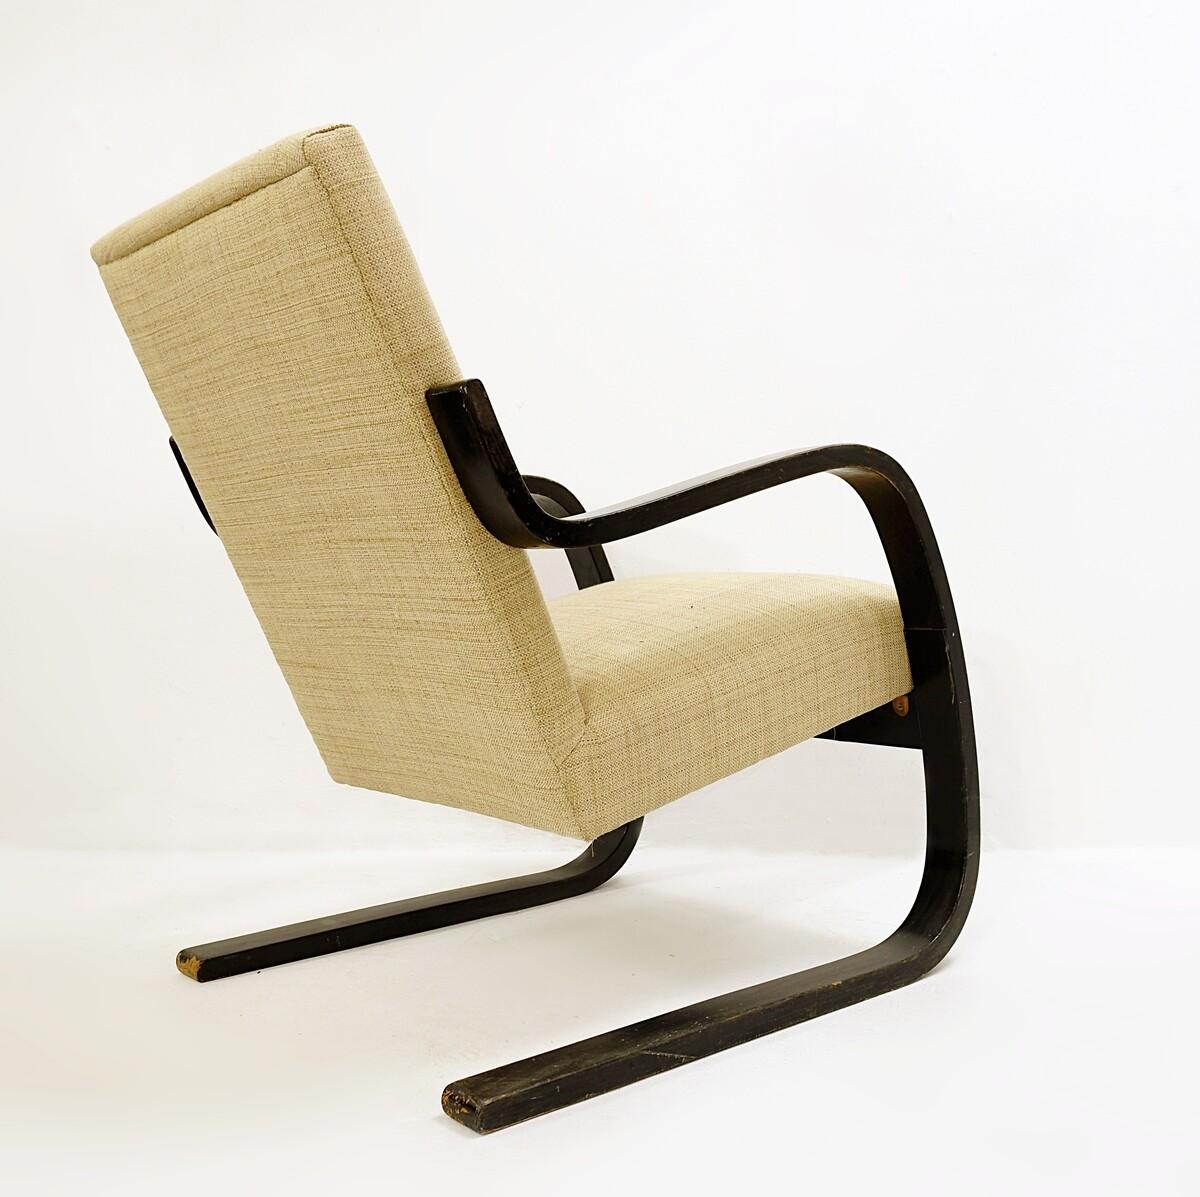 Bentwood Armchair by Alvar Aalto for Artek - New upholstery - Finland c.1939 3